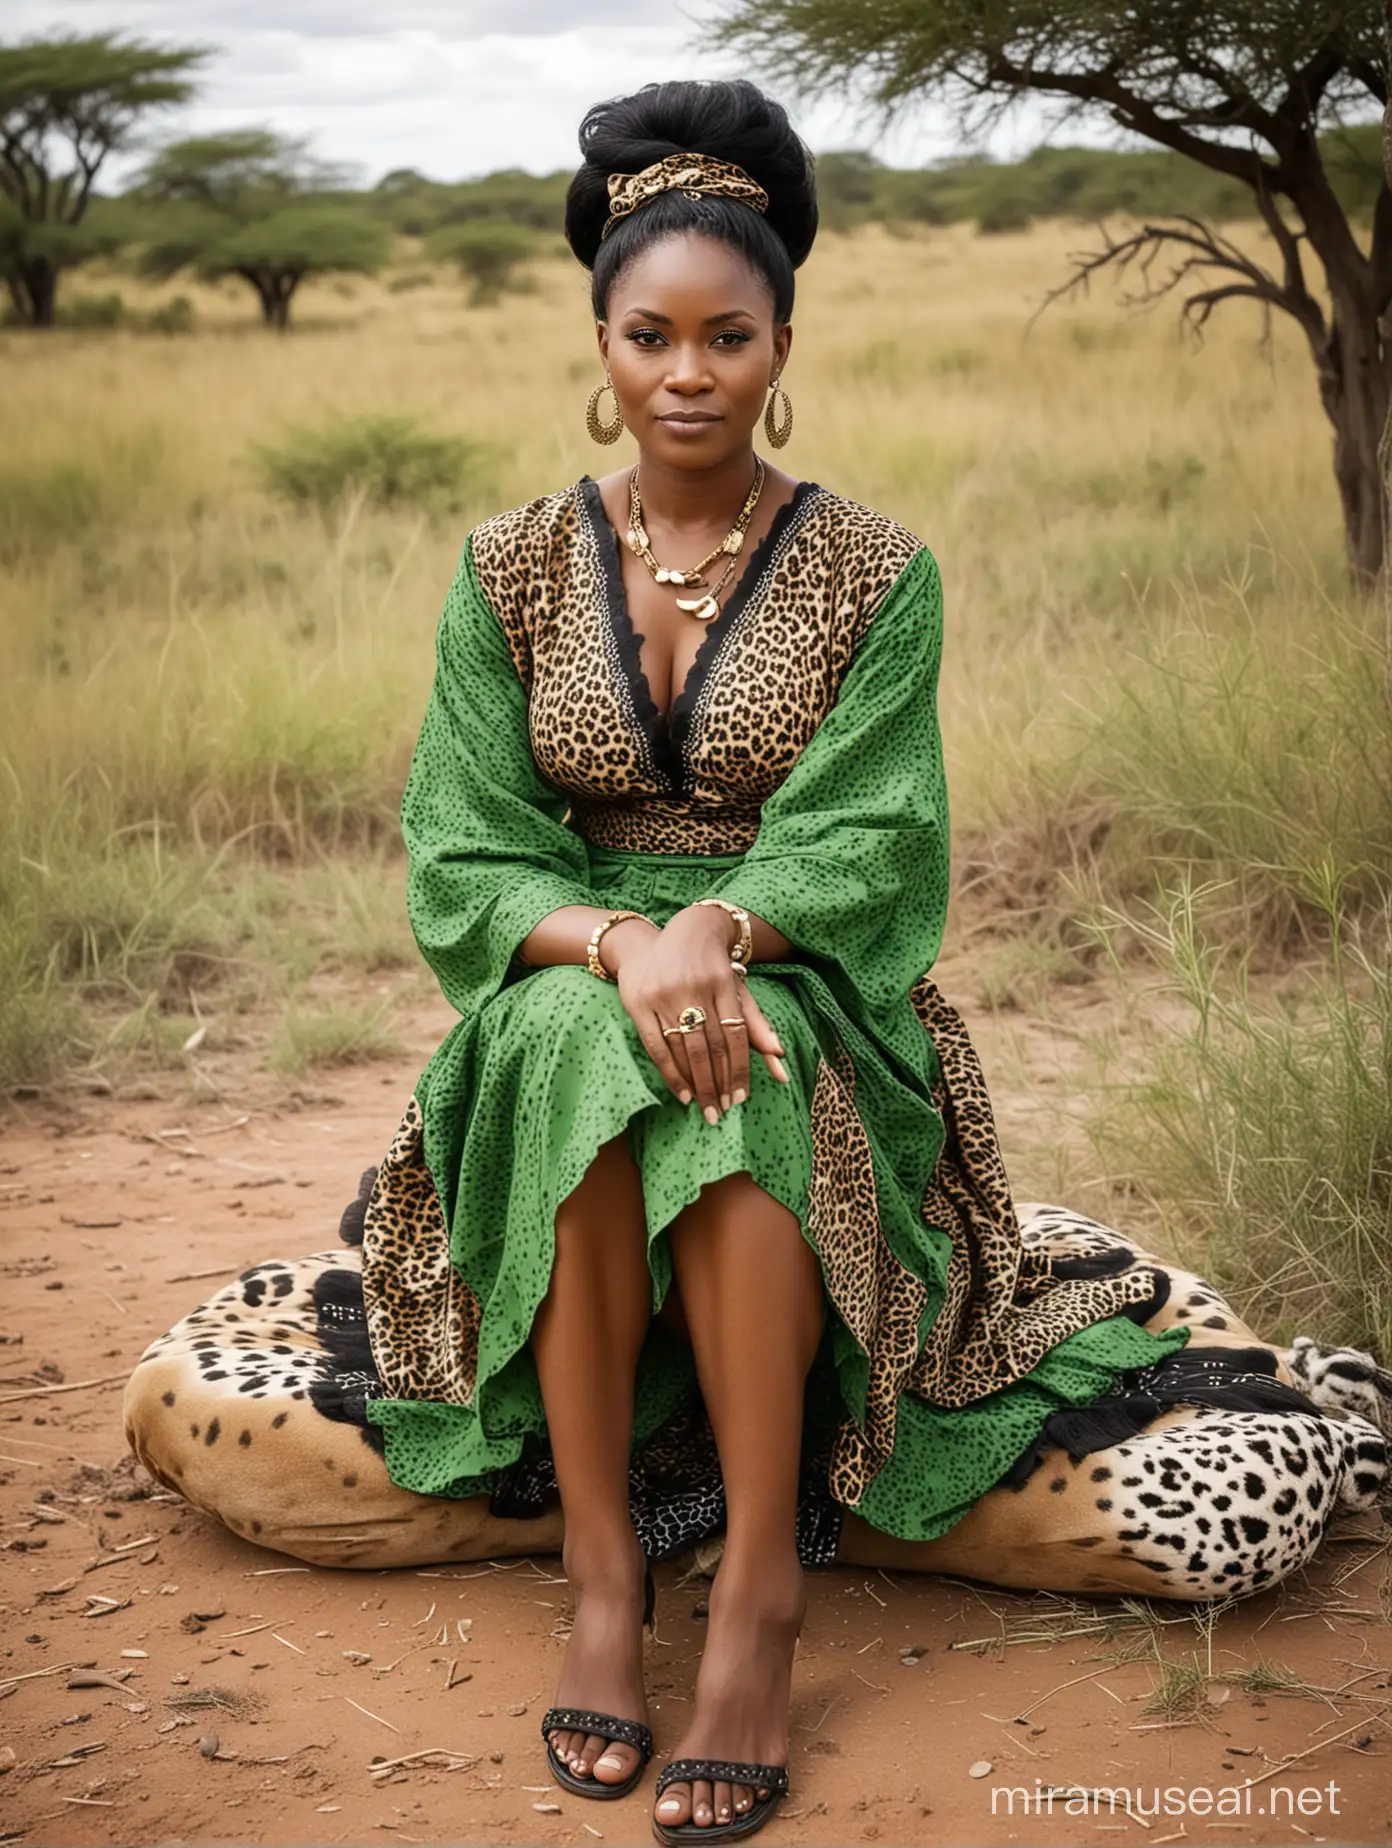 Elegant 49YearOld Nigerian Woman in Traditional Yoruba Dress with Leopard Companion